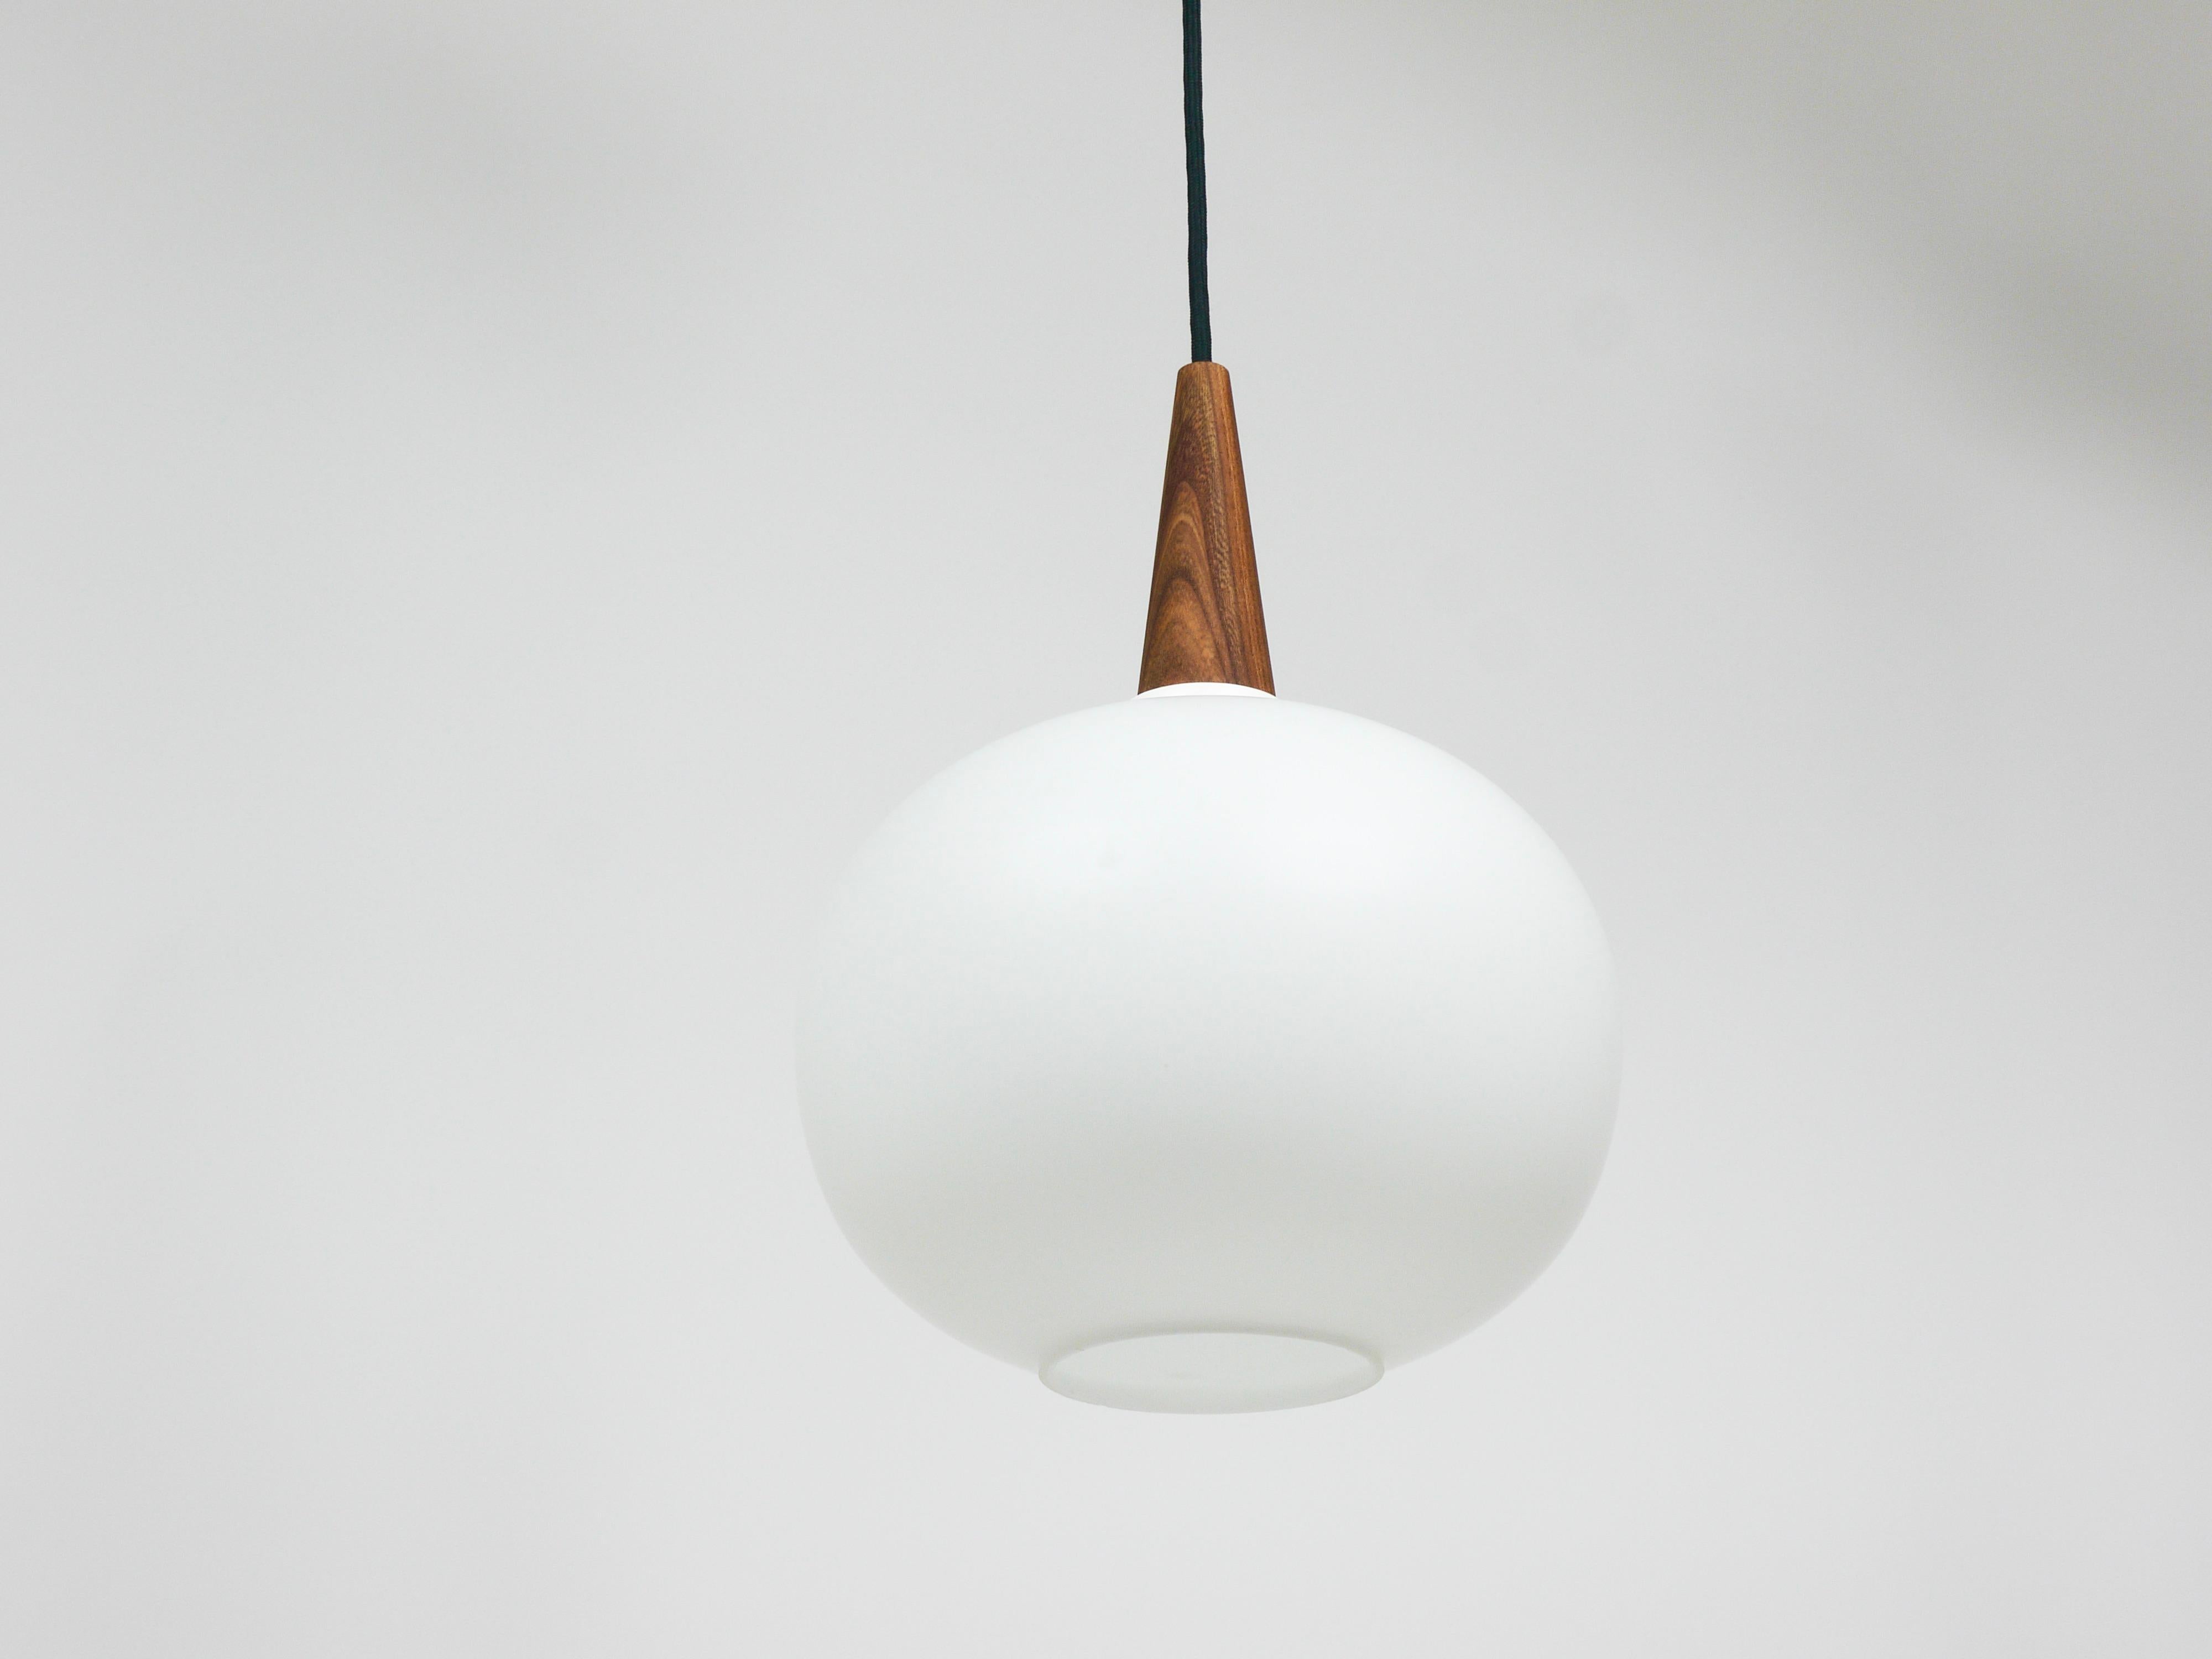 Louis Kalff Teak & Opaline Pendant Suspension Lamp, Philips, Netherlands In Good Condition For Sale In Vienna, AT